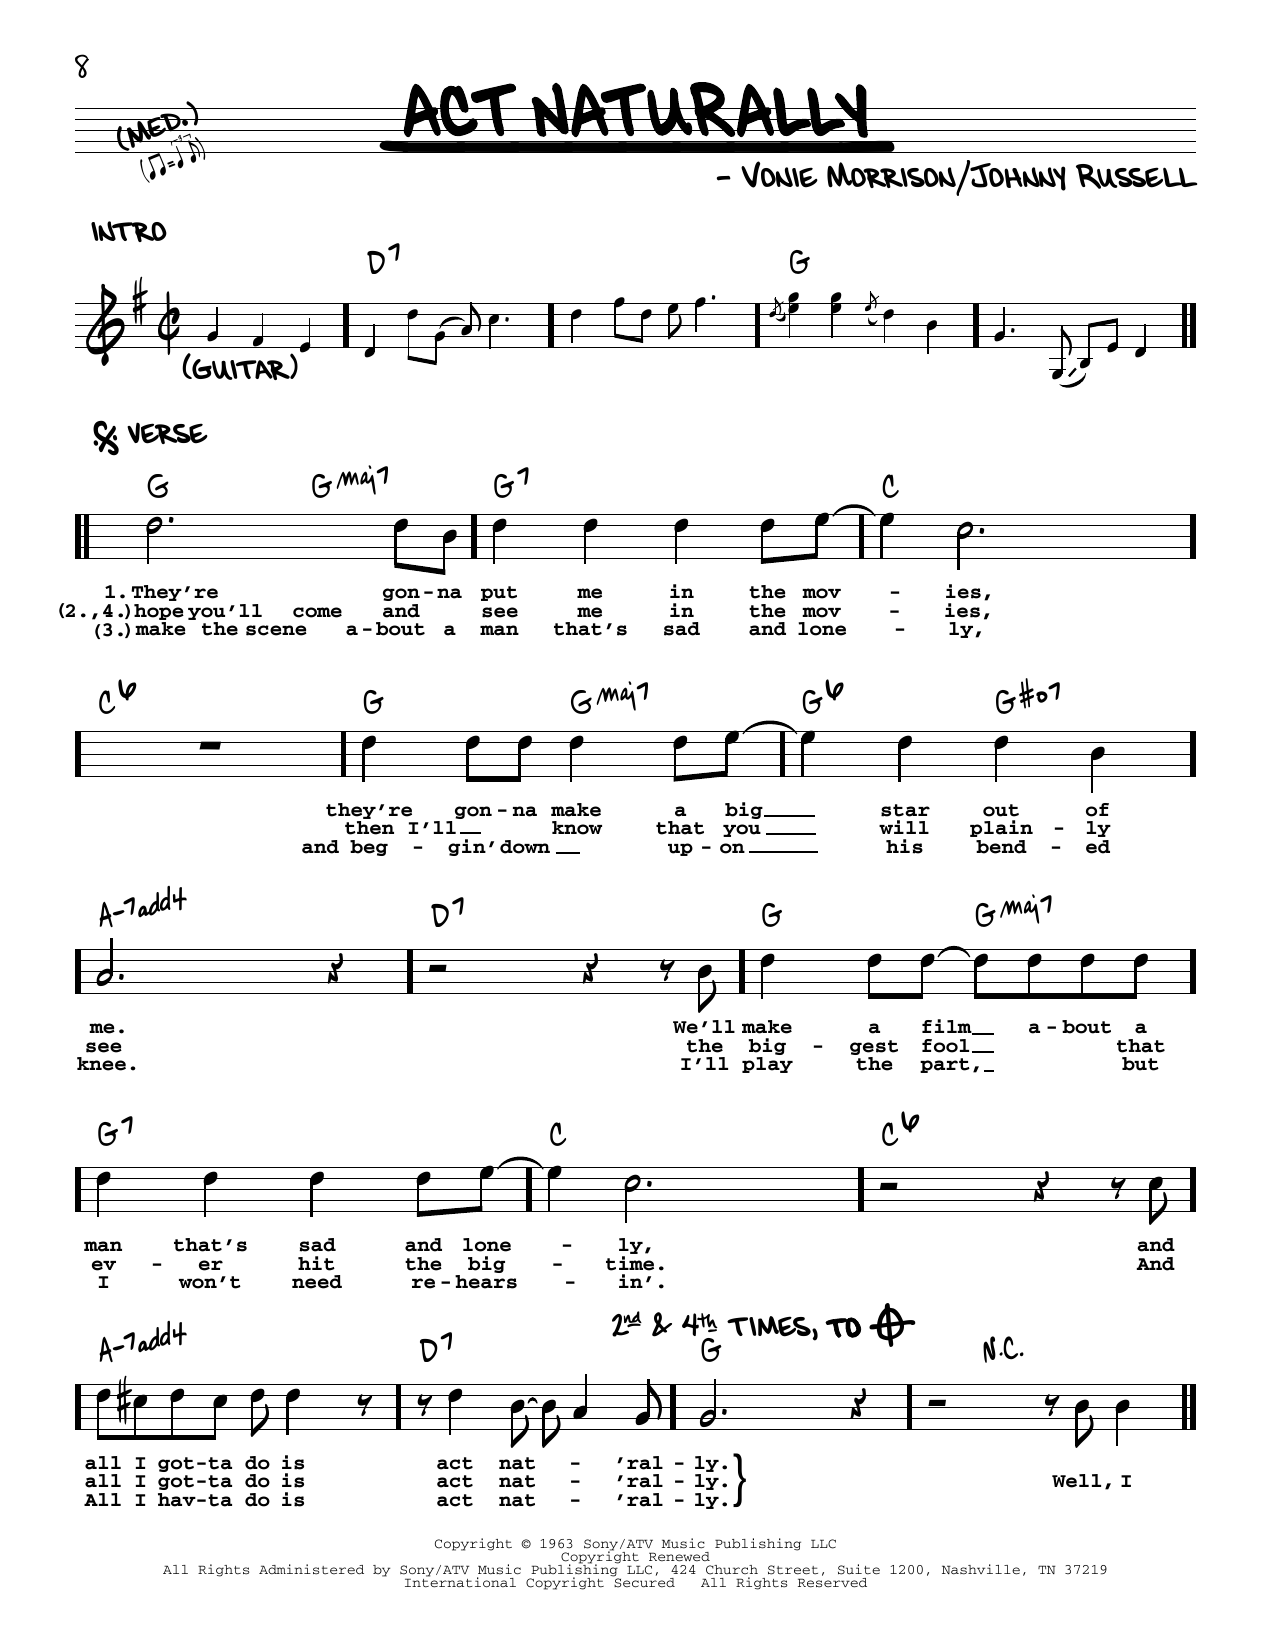 The Beatles Act Naturally [Jazz version] Sheet Music Notes & Chords for Real Book – Melody, Lyrics & Chords - Download or Print PDF